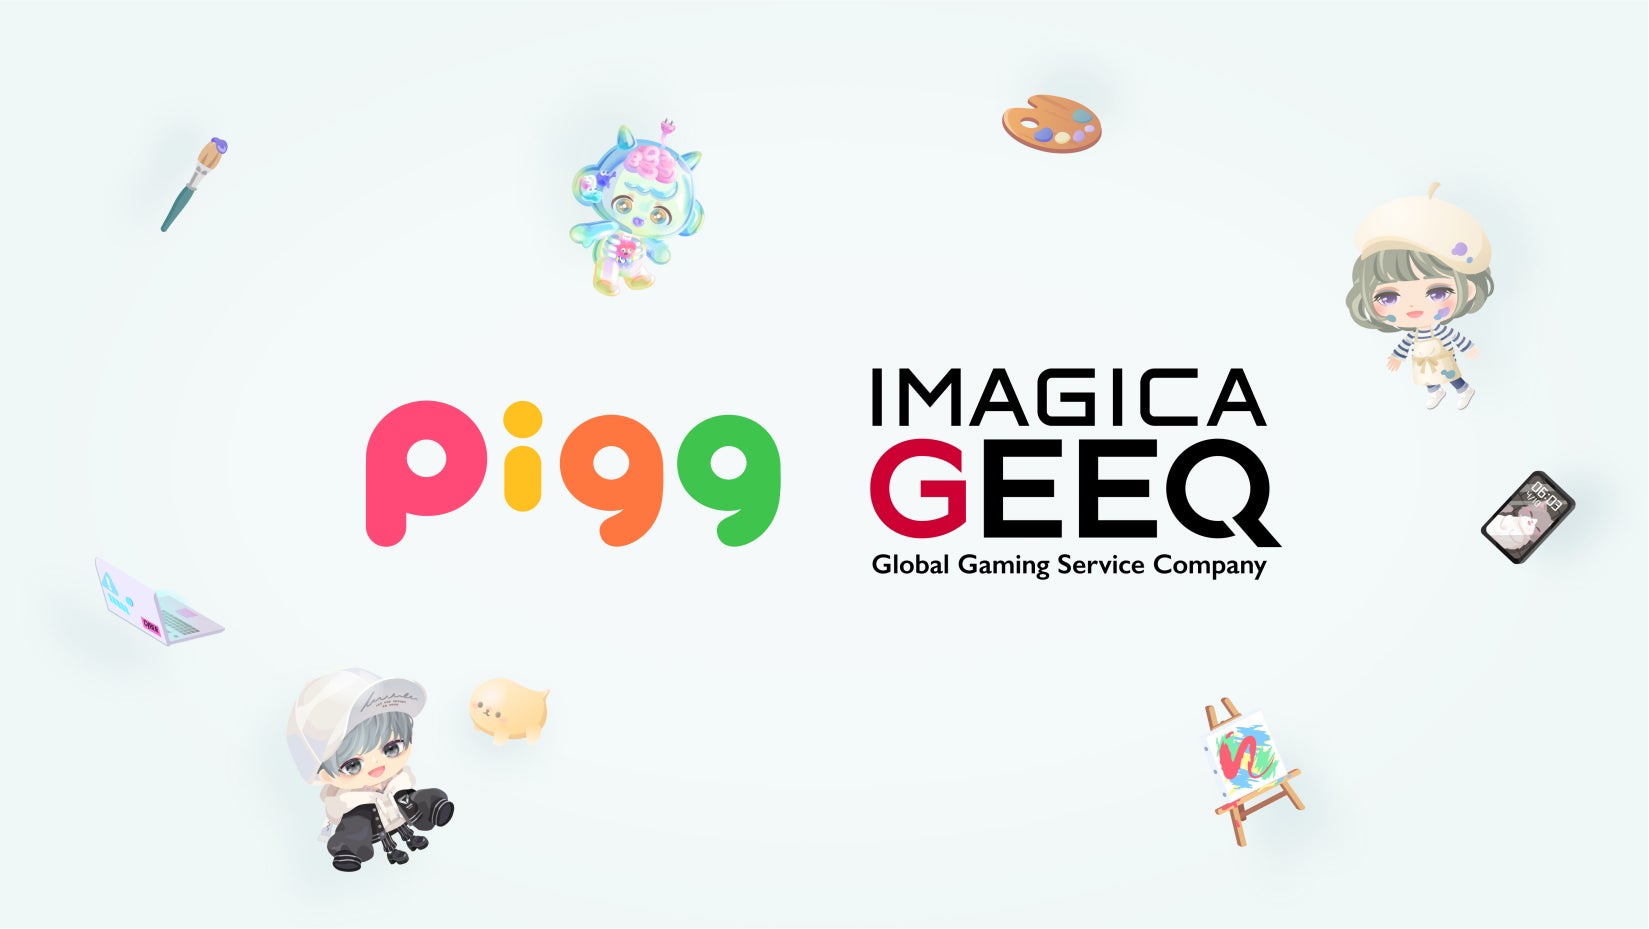 IMAGICA GEEQとメタバースコミュニティ「ピグ」が共同で、クリエイターの採用・育成強化を目的に、ピグクリエイティブ制作協業チームを組成